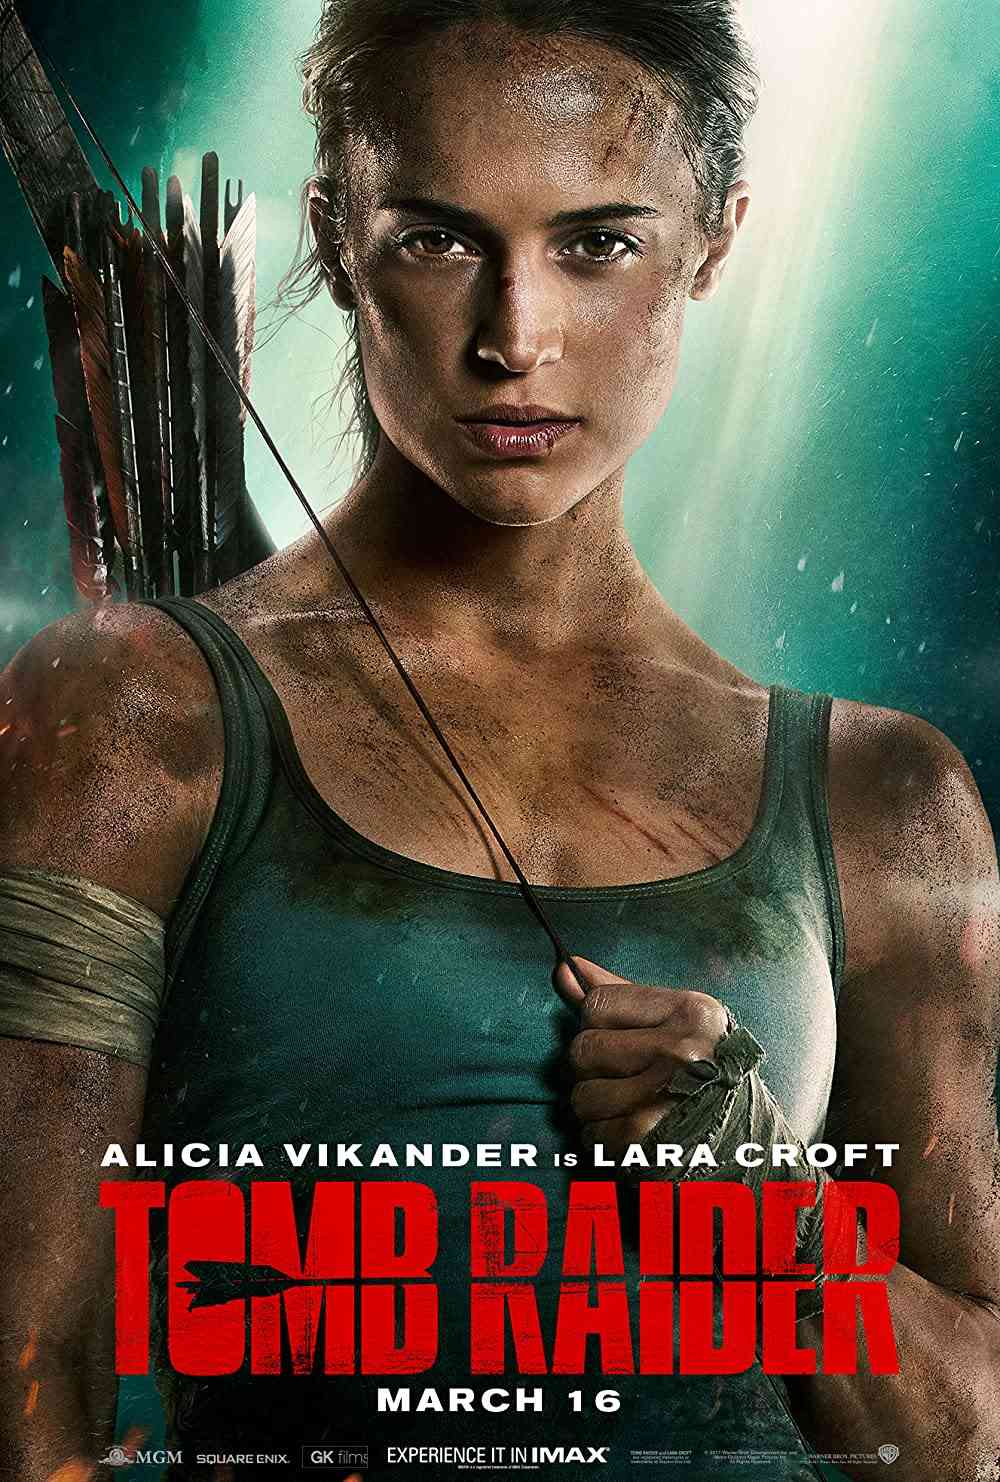 FULL MOVIE: Tomb Raider (2018) [Action]